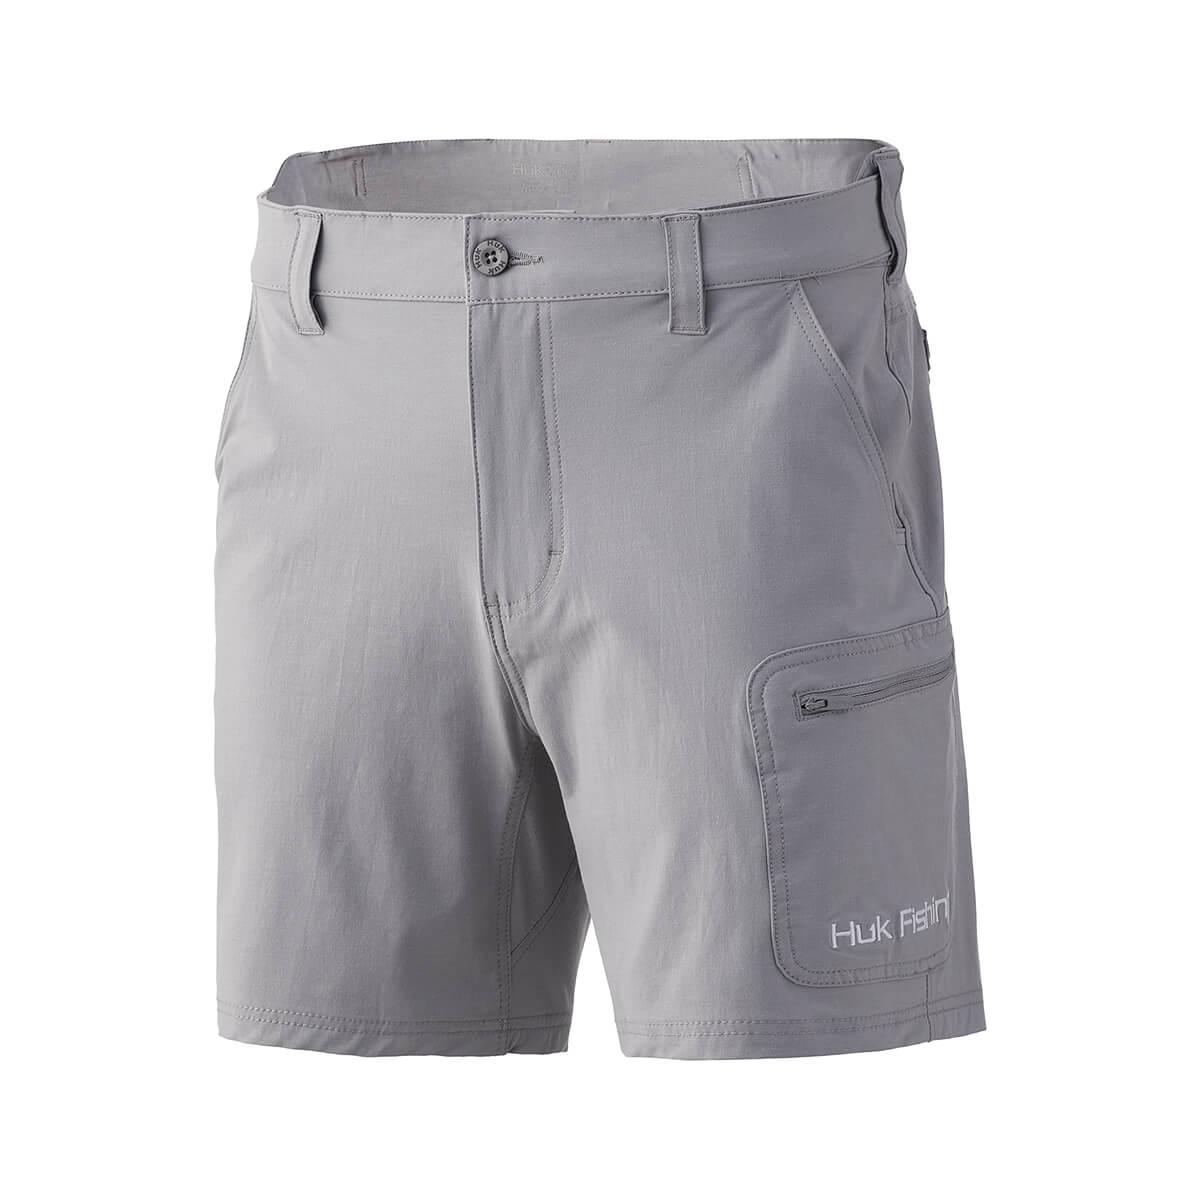 Mast General Store  Men's Next Level Shorts - 7 Inch